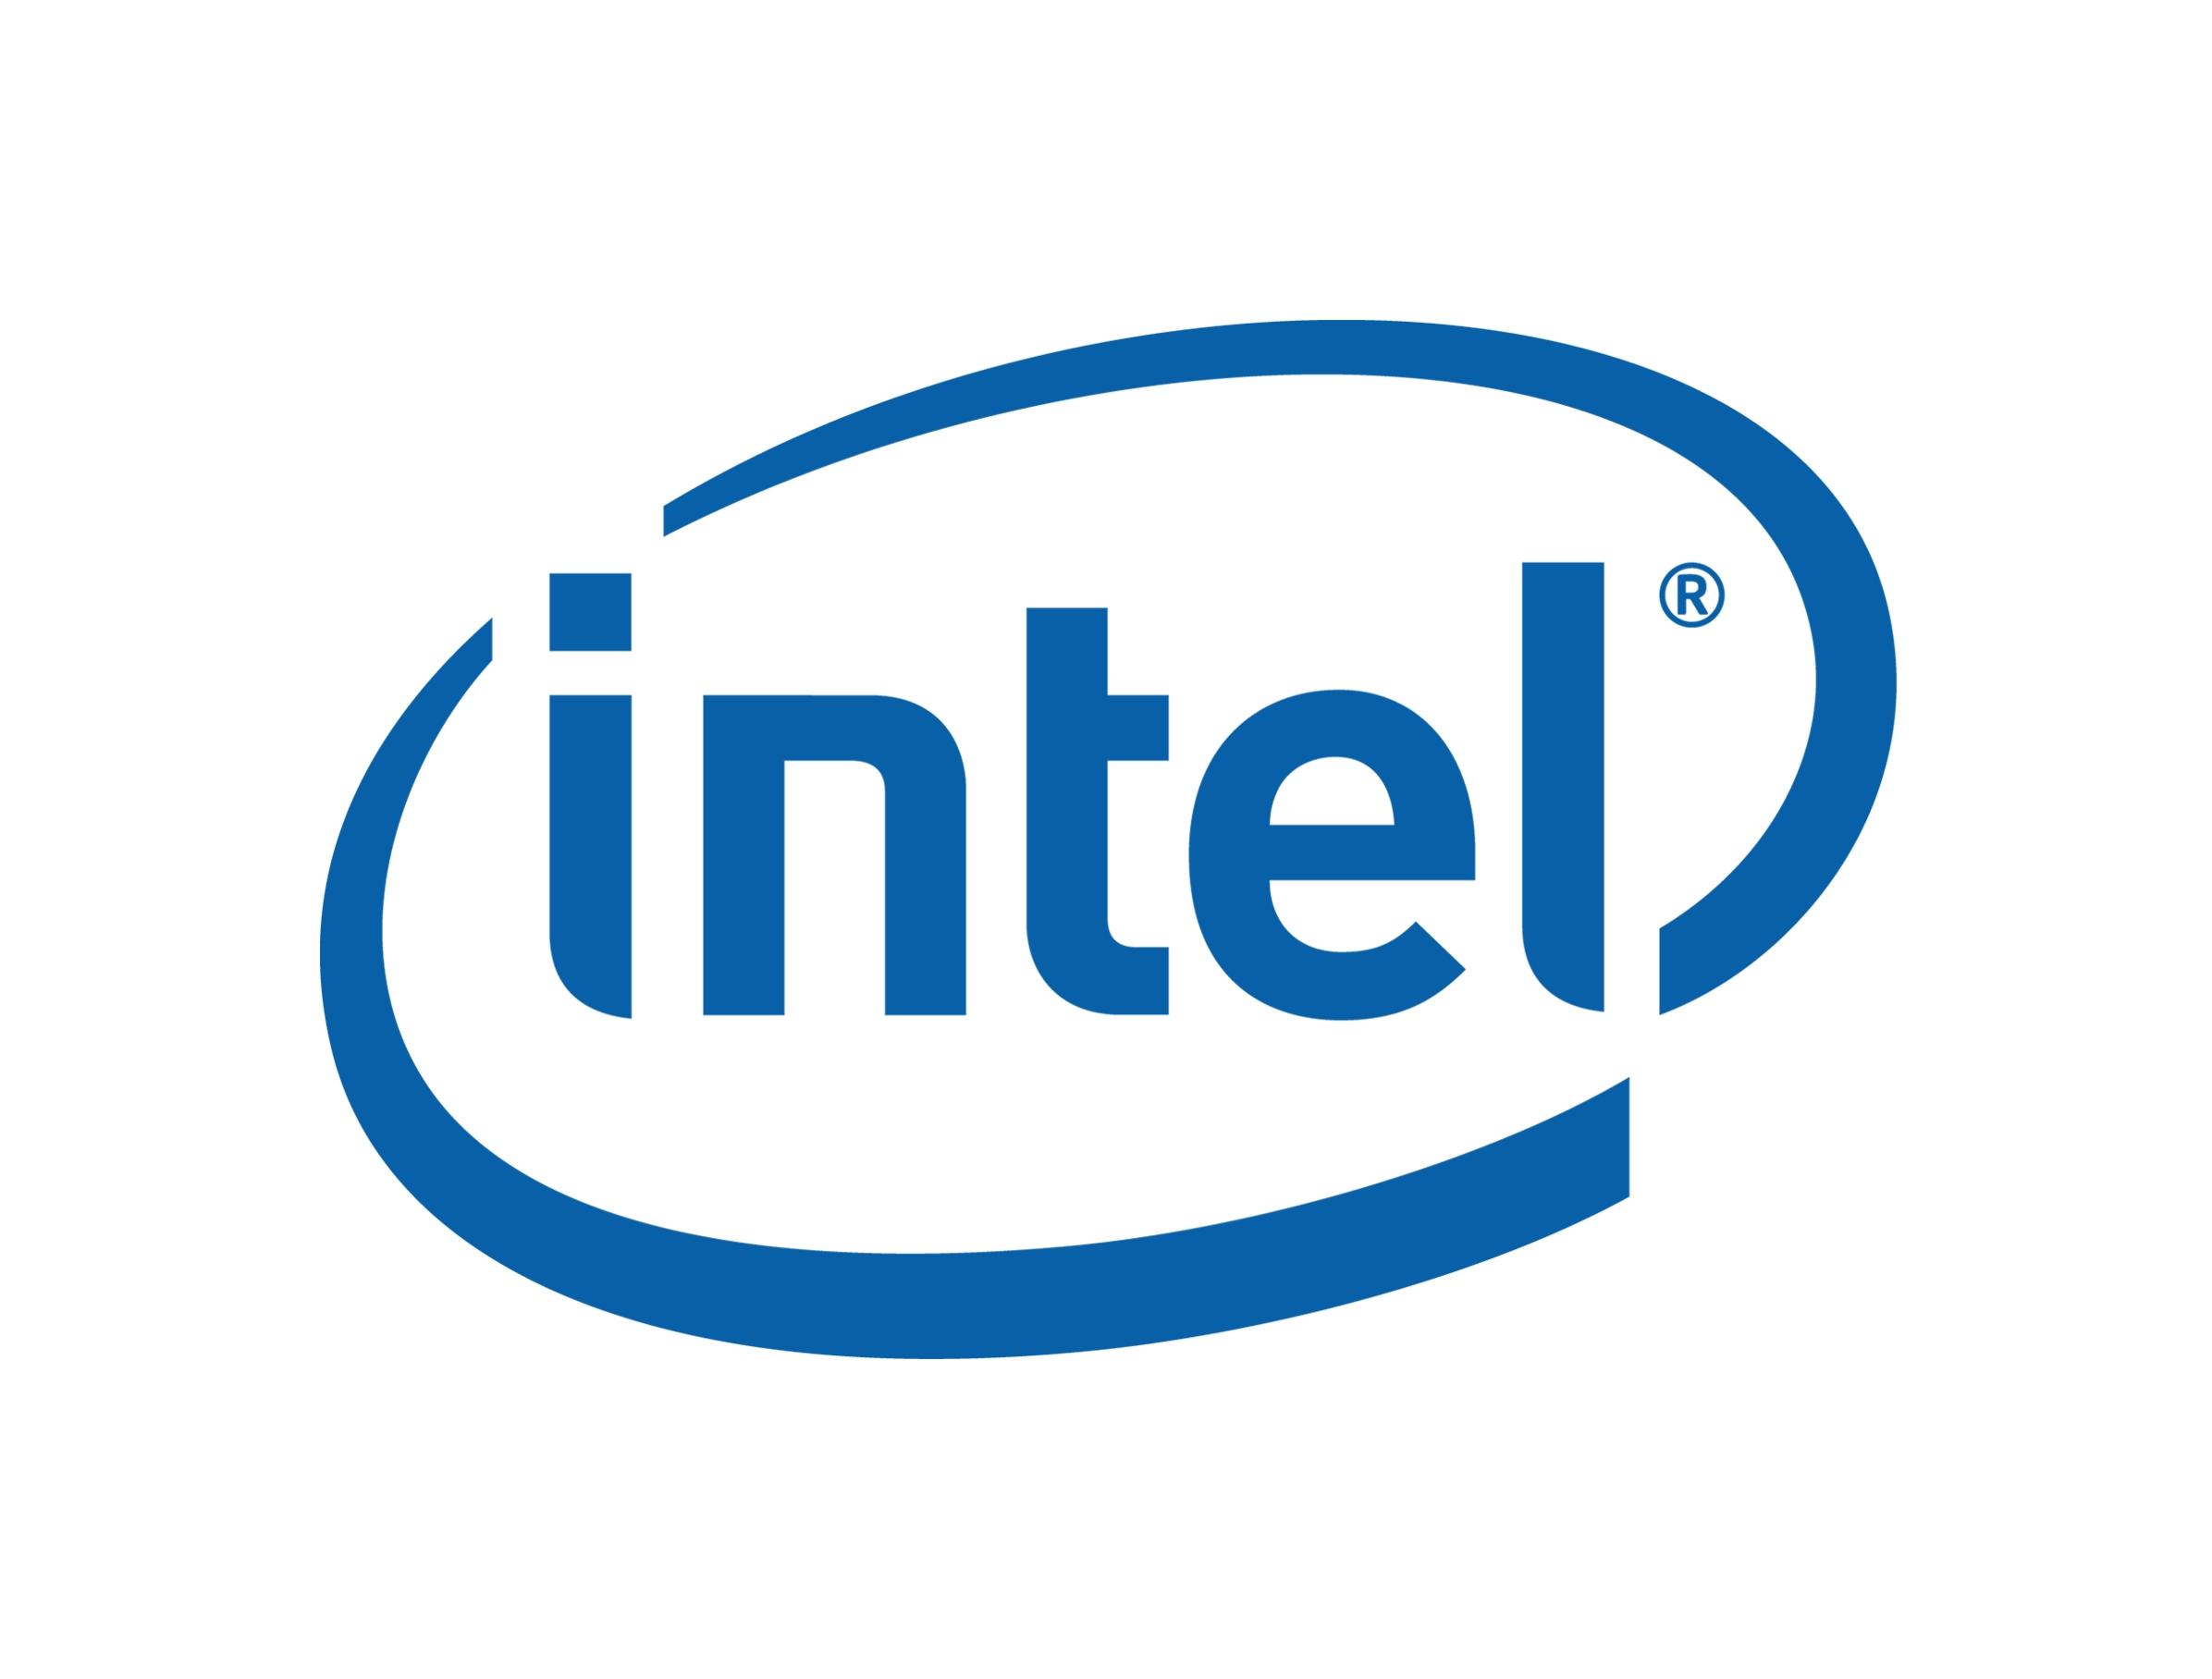 Intel extension